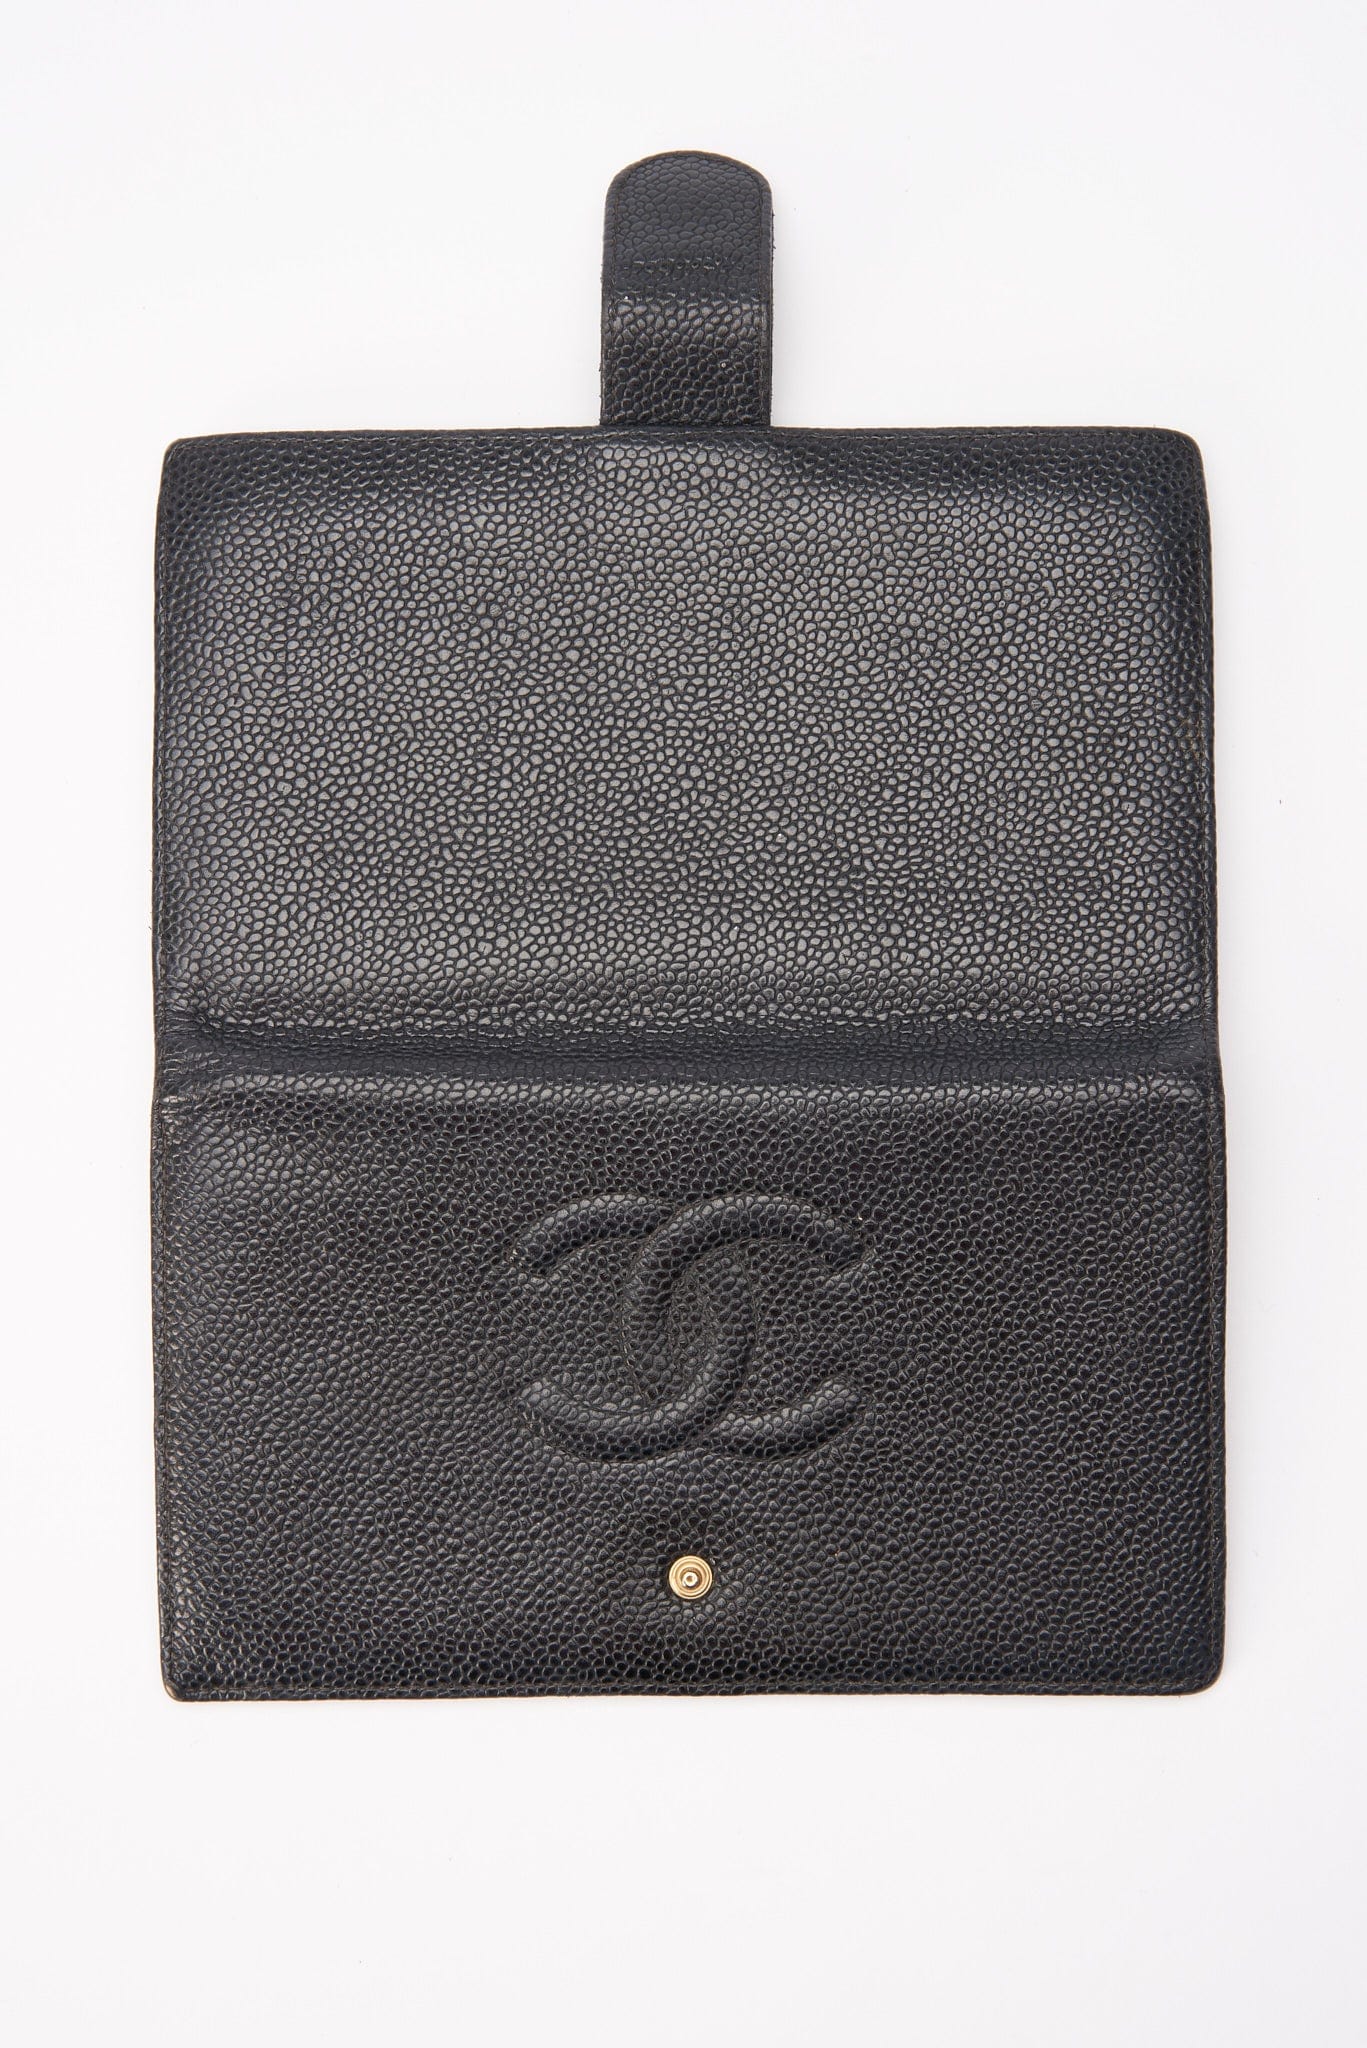 Chanel Black Caviar Leather Vintage Wallet